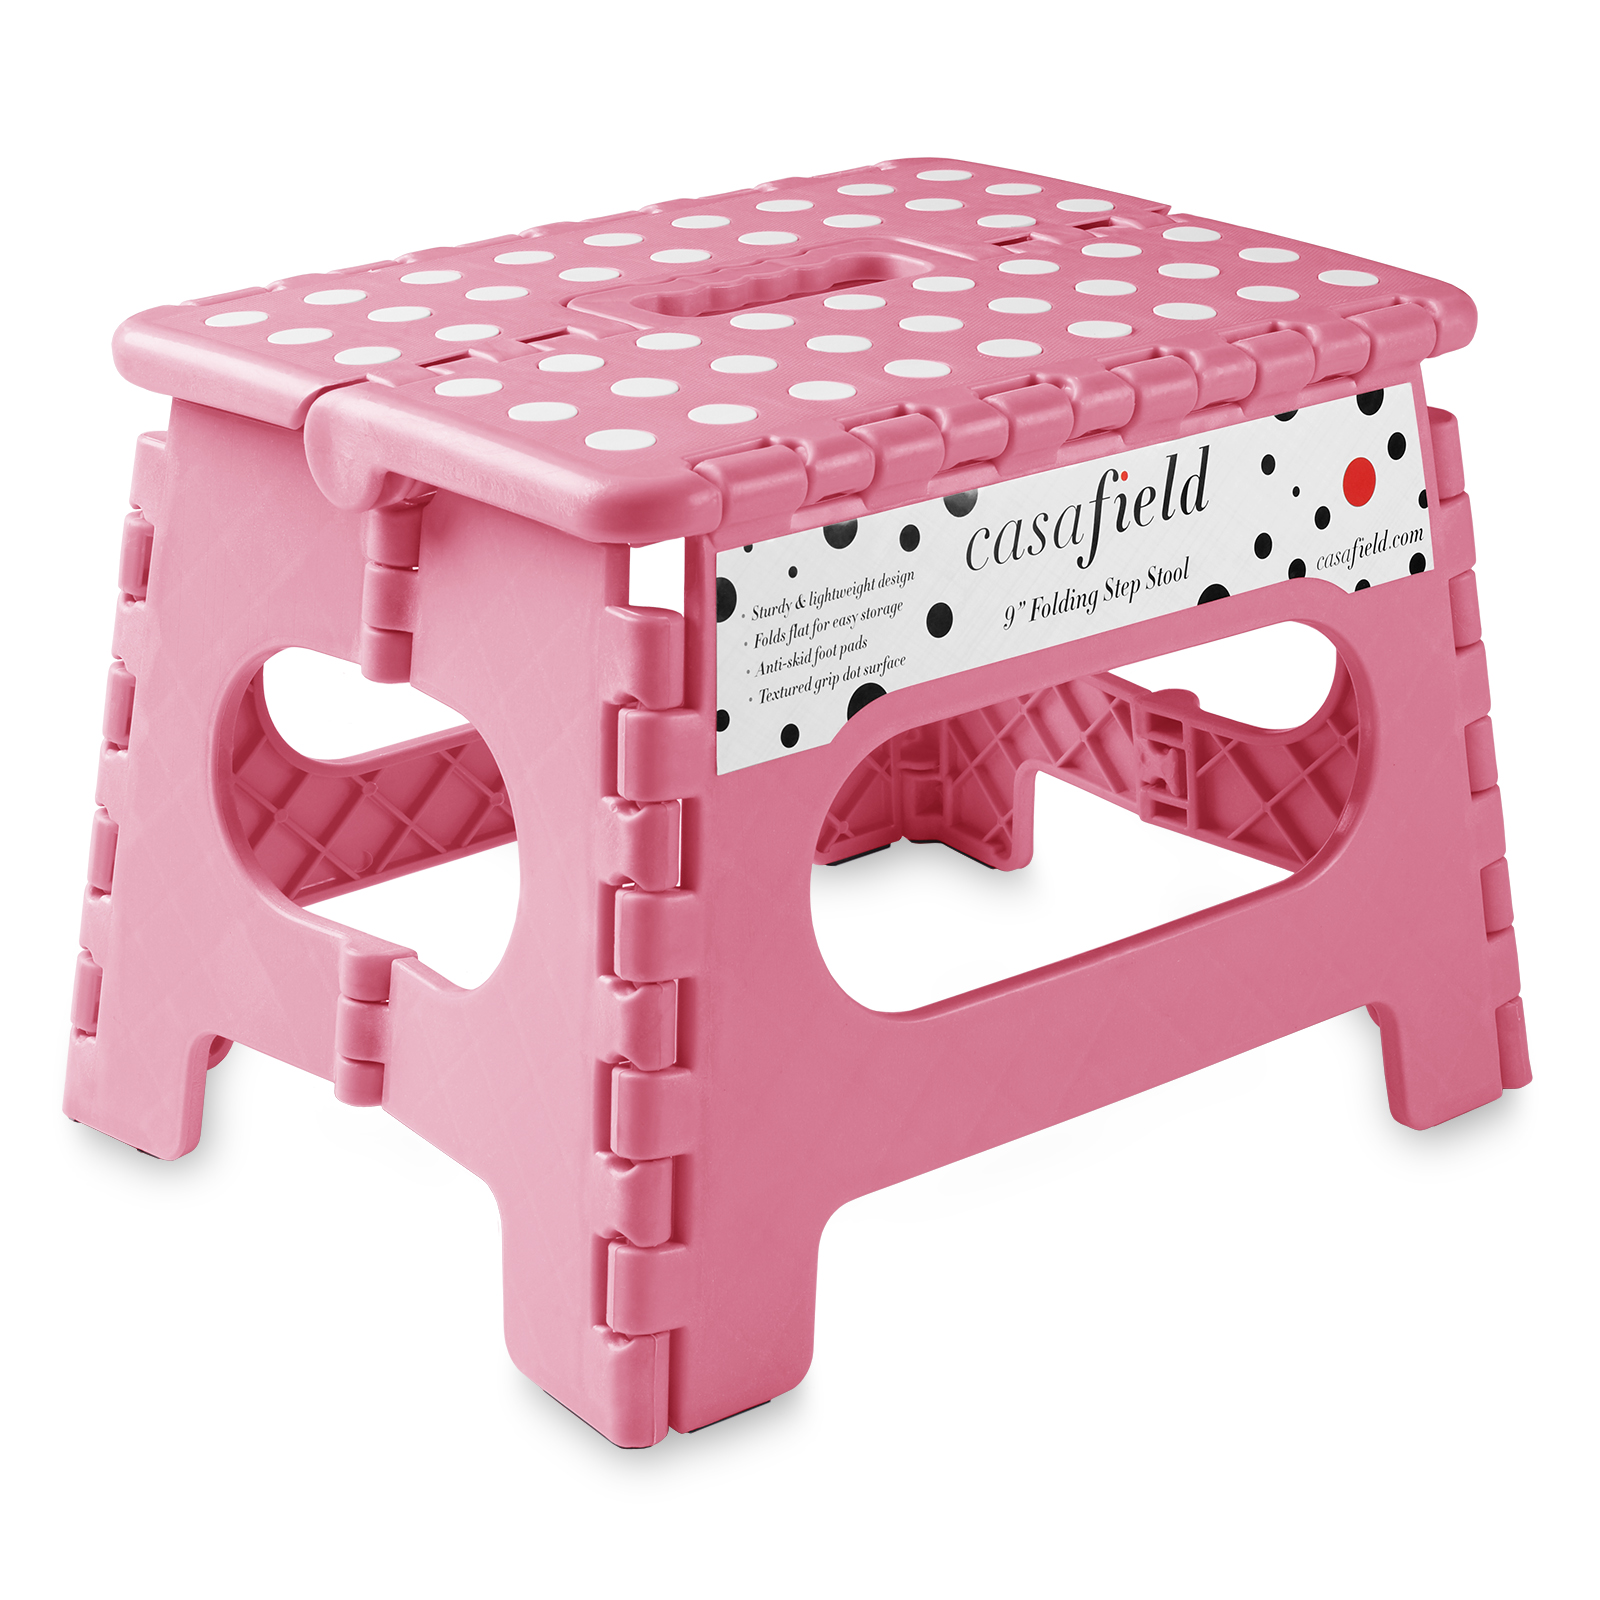 22cm Pink Step Stool SL0404 NEW MULTI PURPOSE FOLDABLE PLASTIC STEP STOOL 39 32 27 22cm Black//White /& Pink